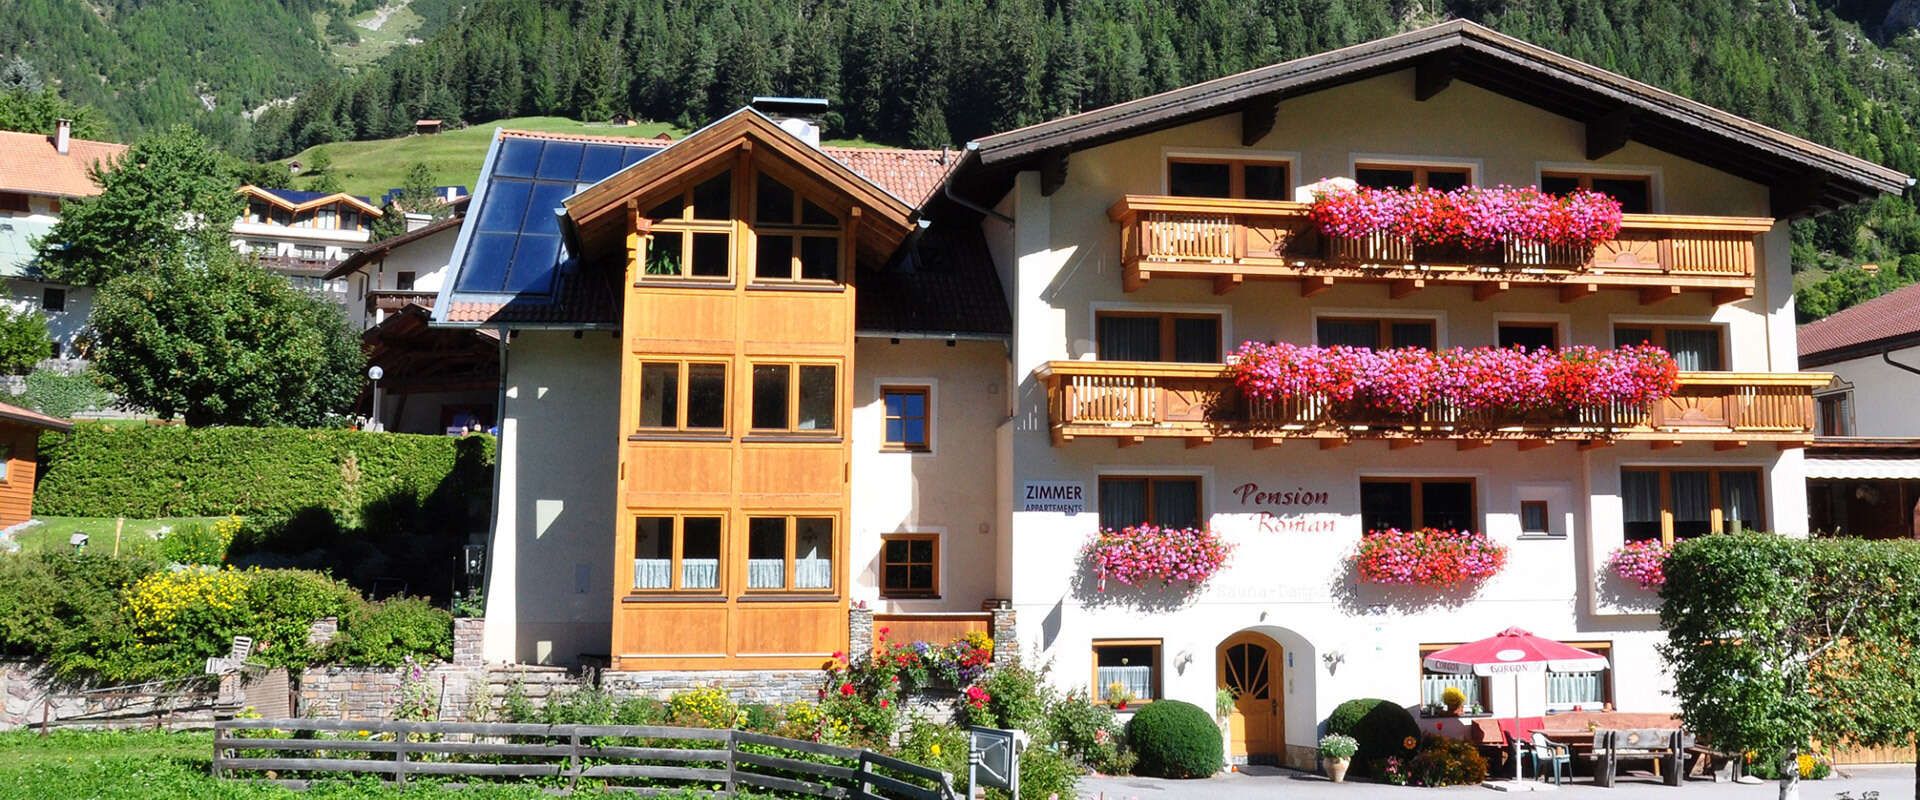 Pension Roman in Pettneu am Arlberg Tyrol